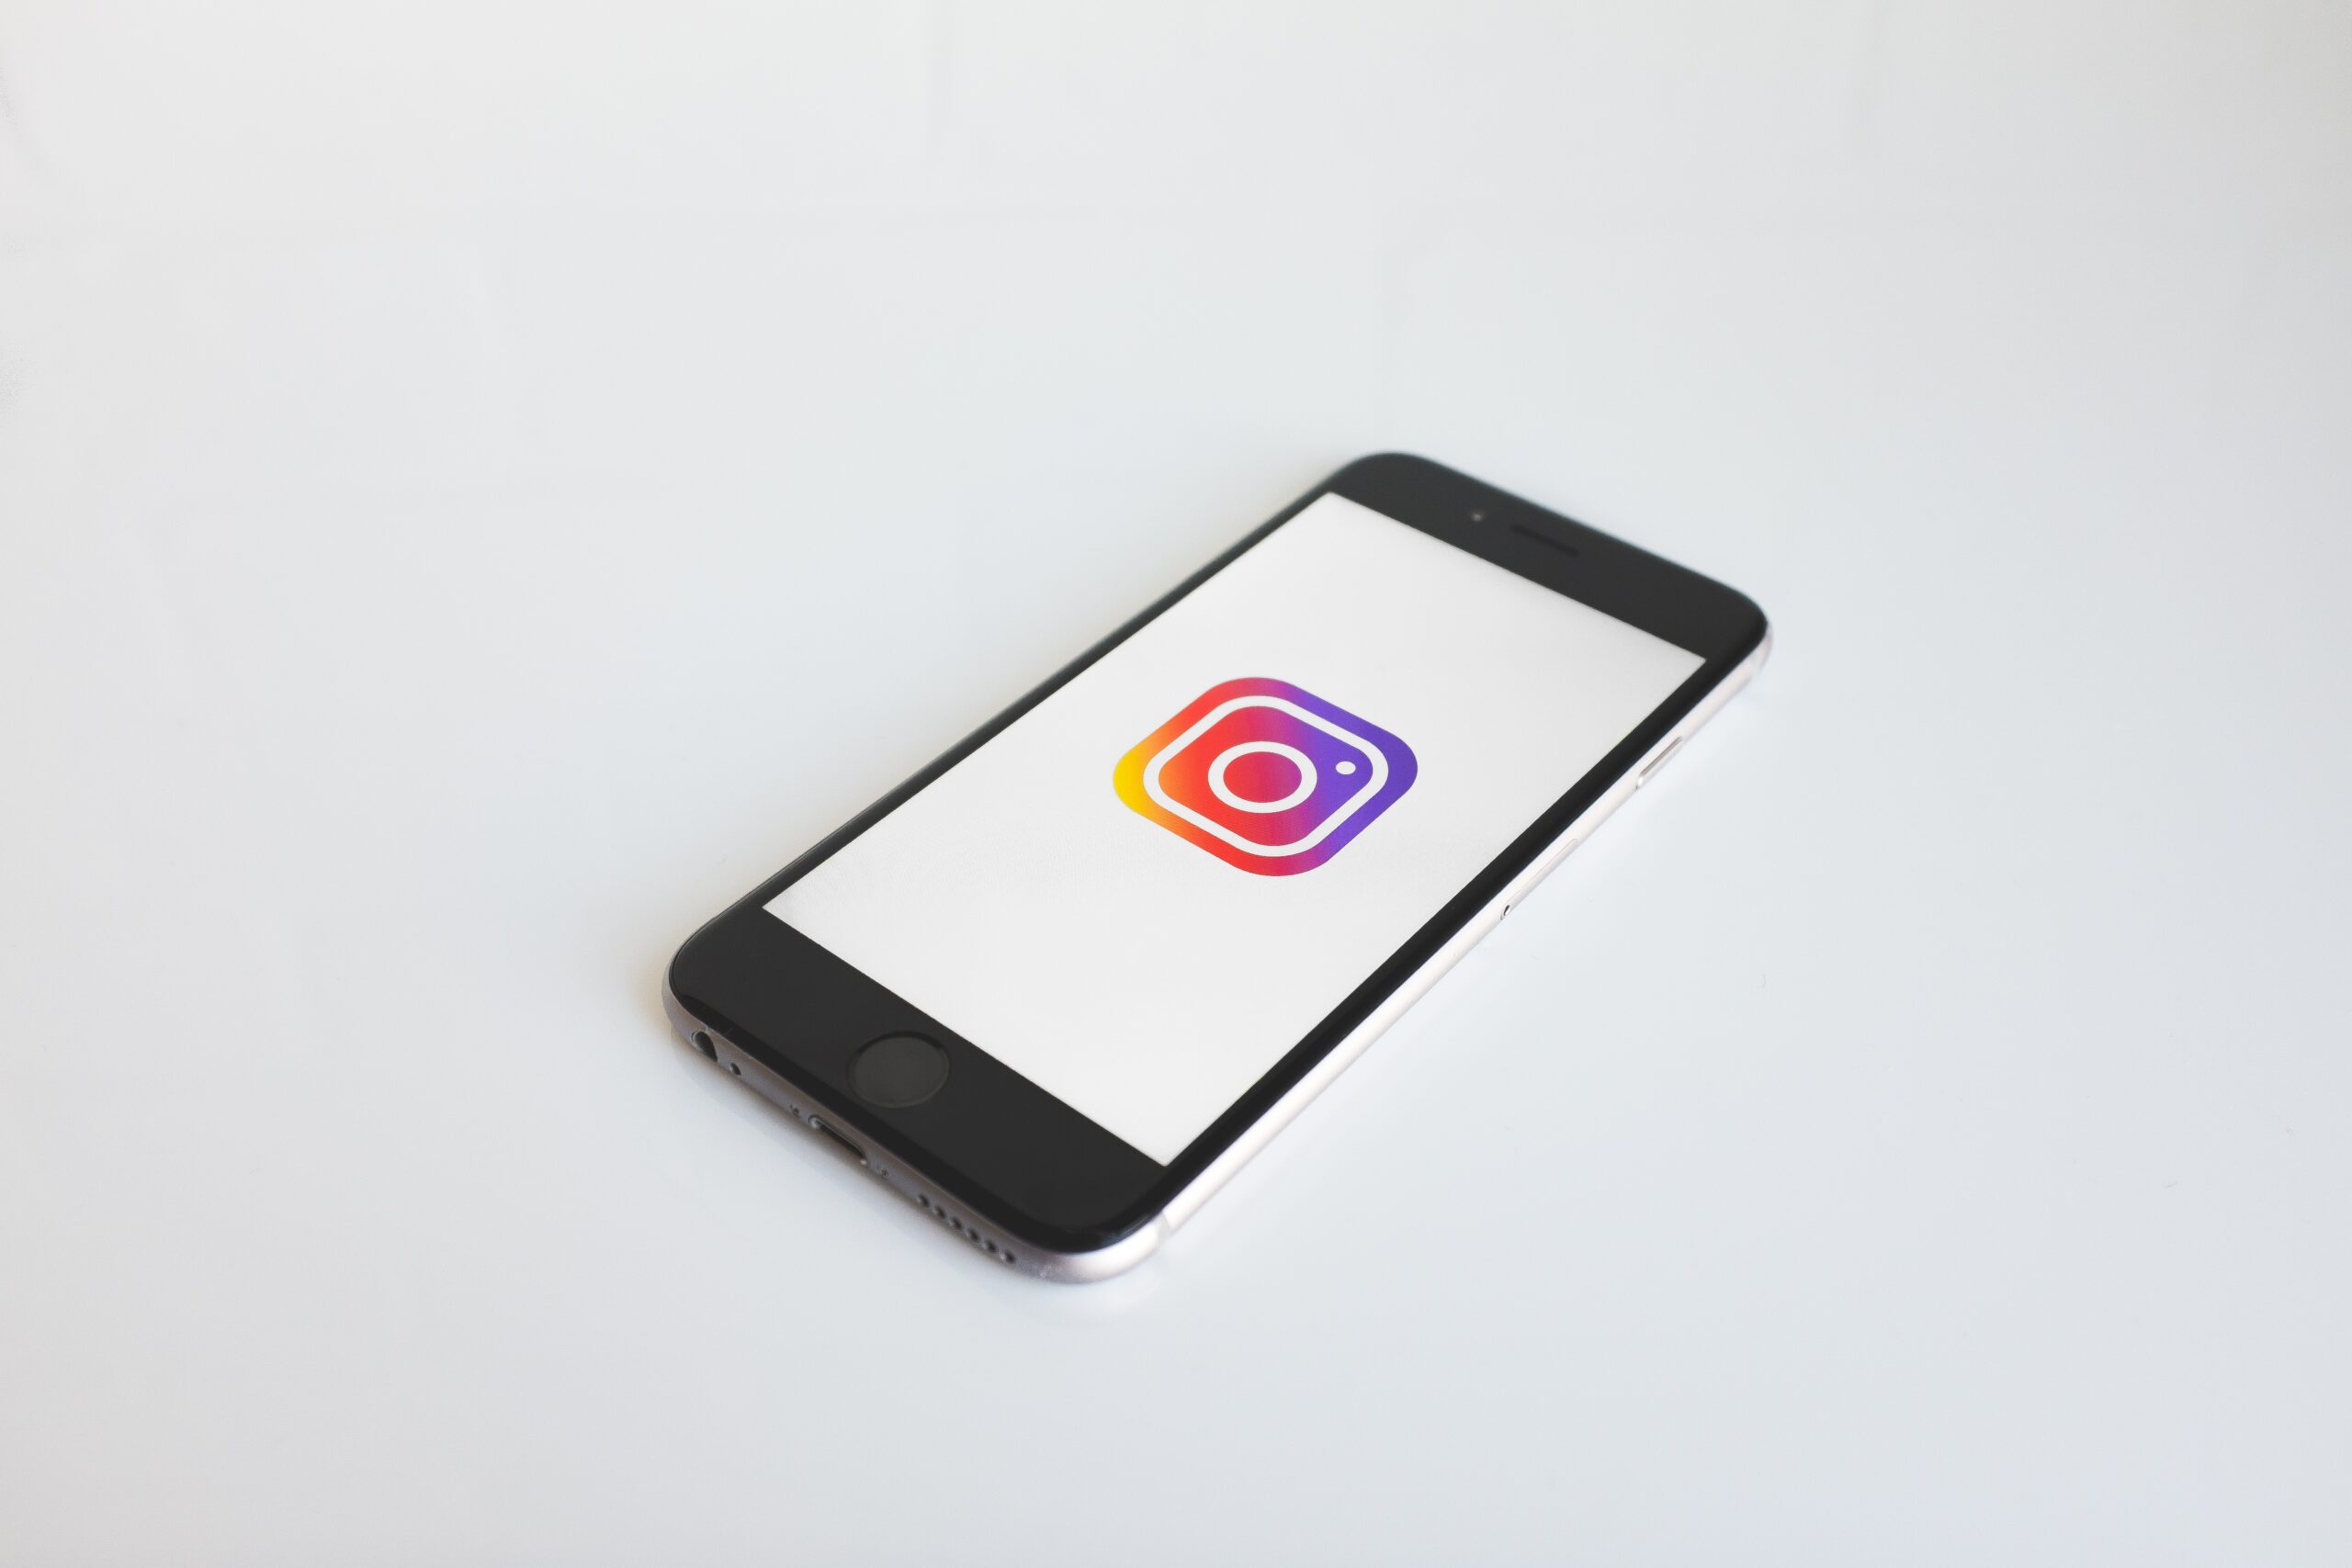 Instagram logo on space grey iPhone 6